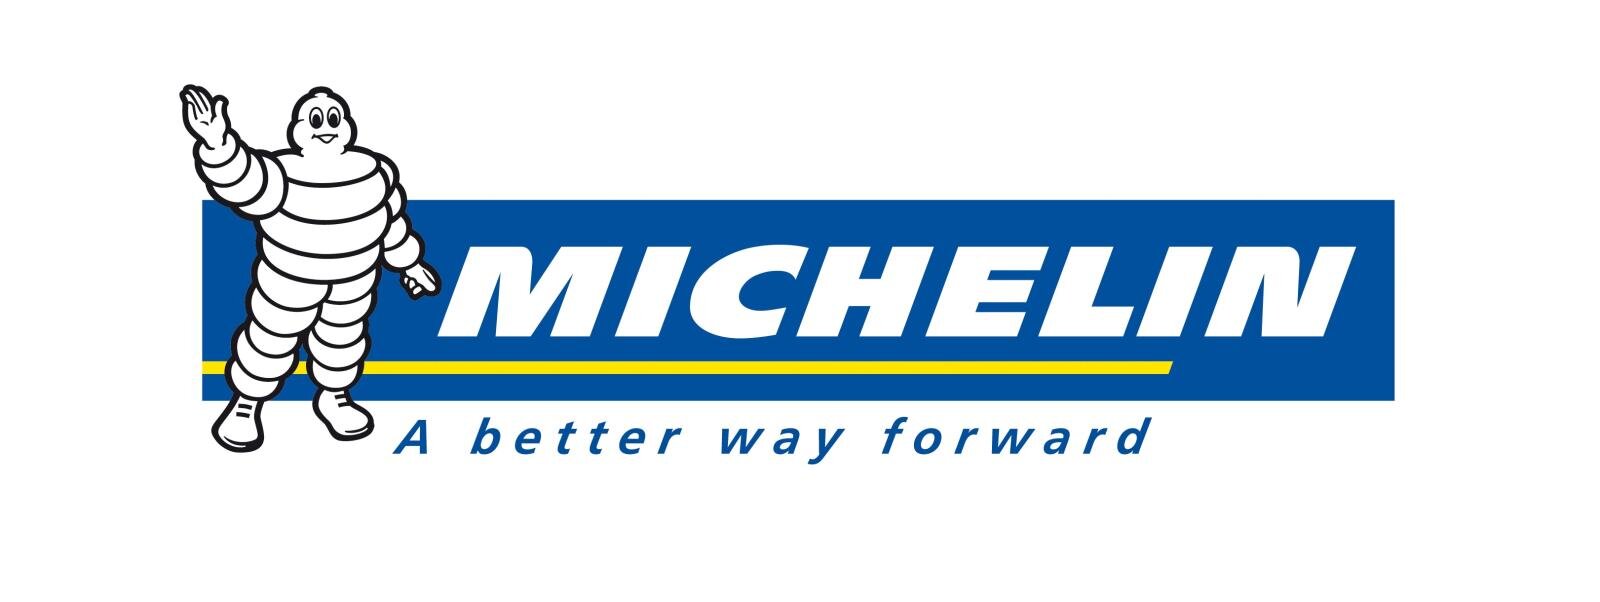 Michelin_Logo2.jpg